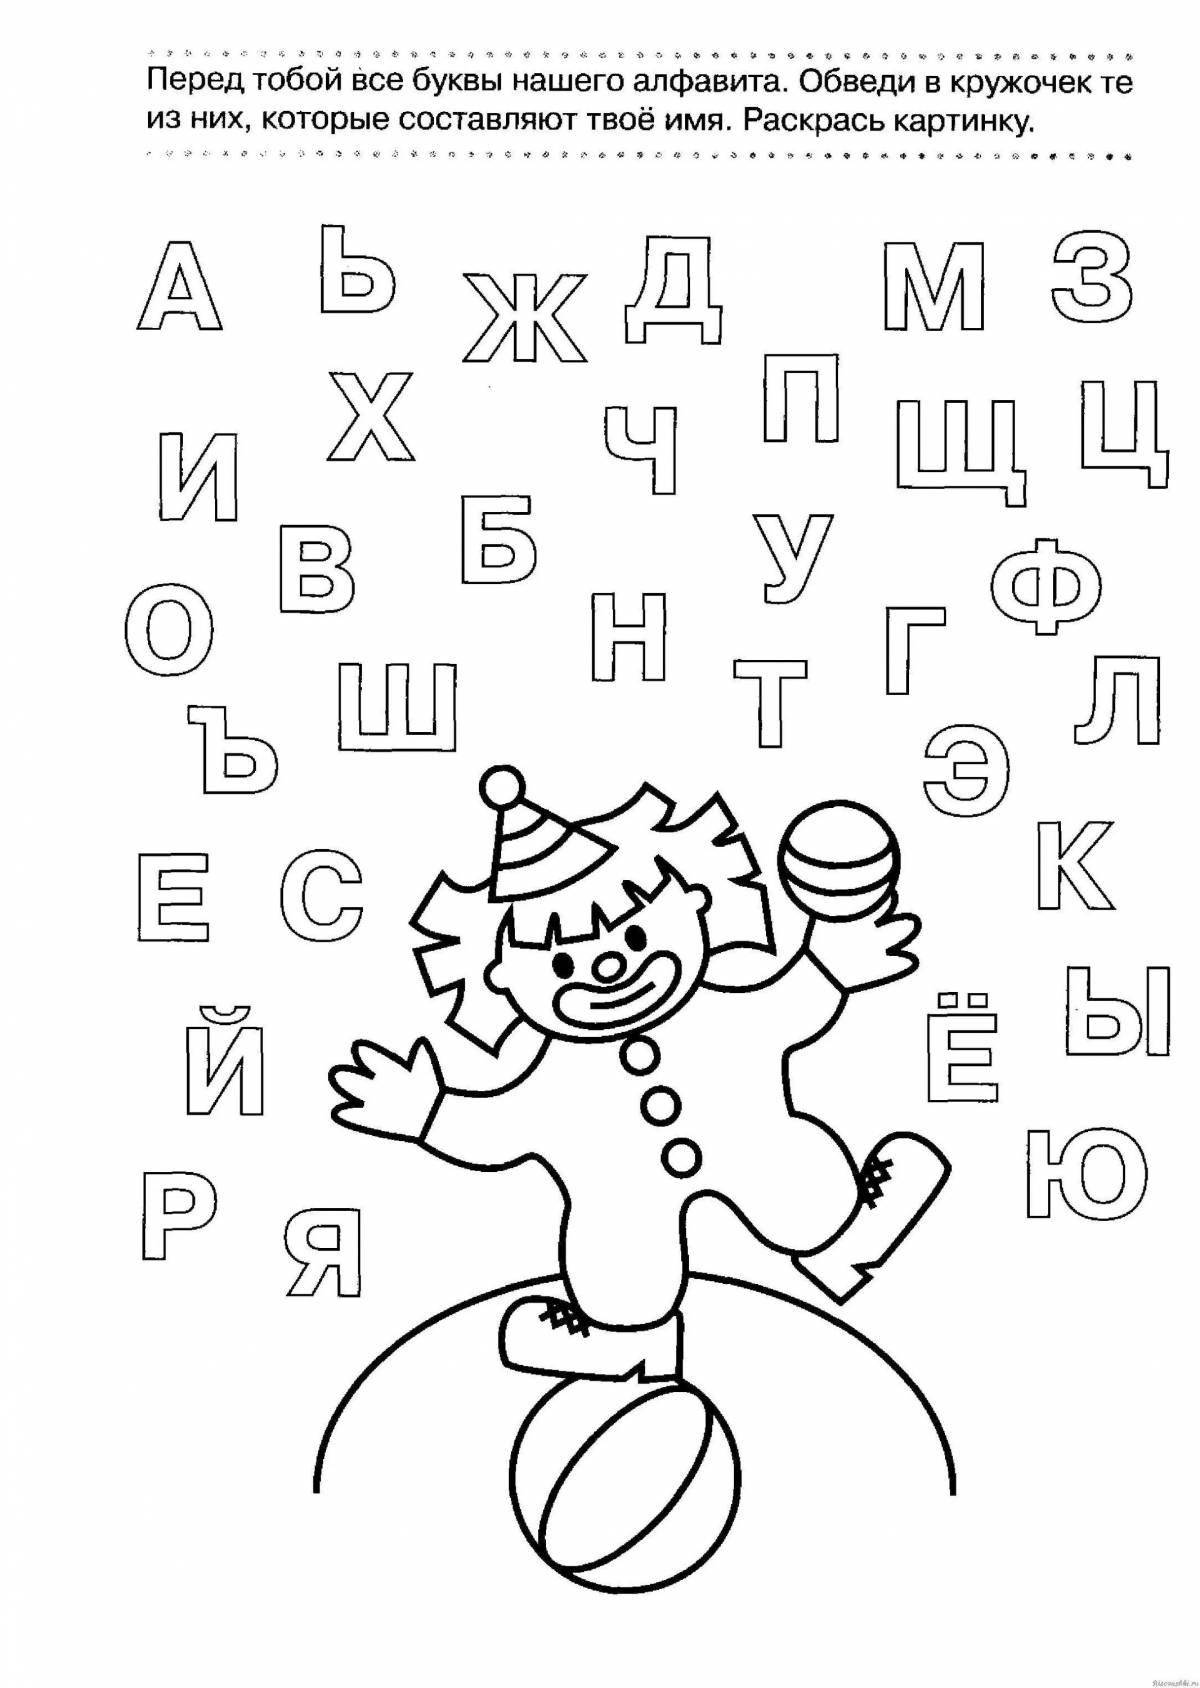 A fun alphabet coloring book for preschoolers